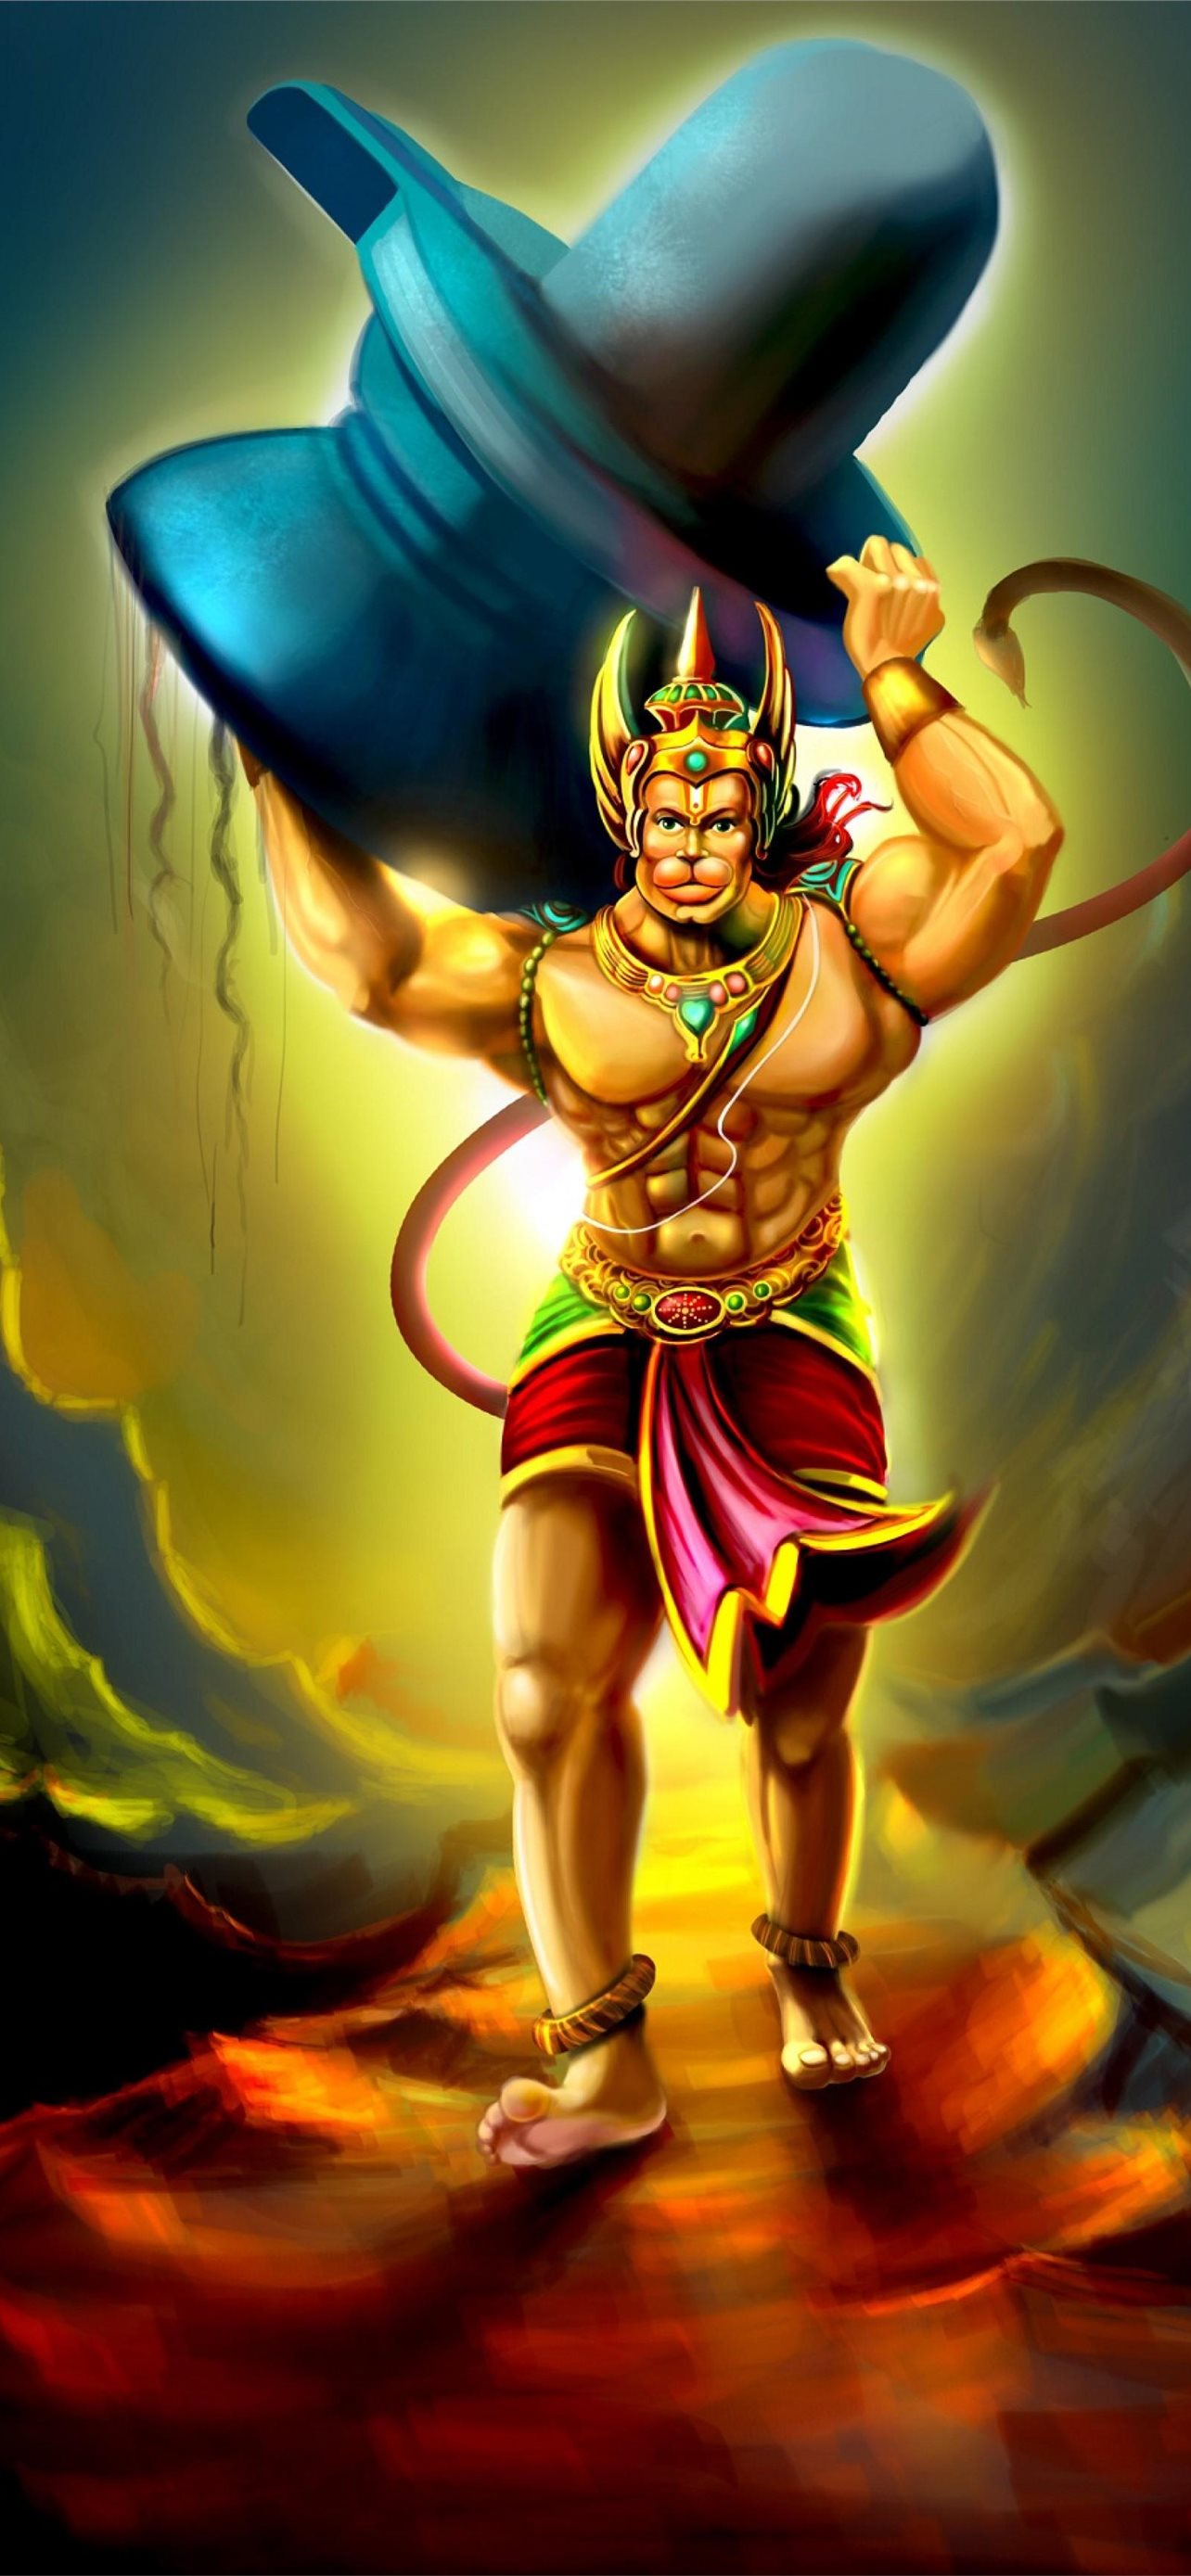 Hanuman 4k Cave iPhone wallpaper 